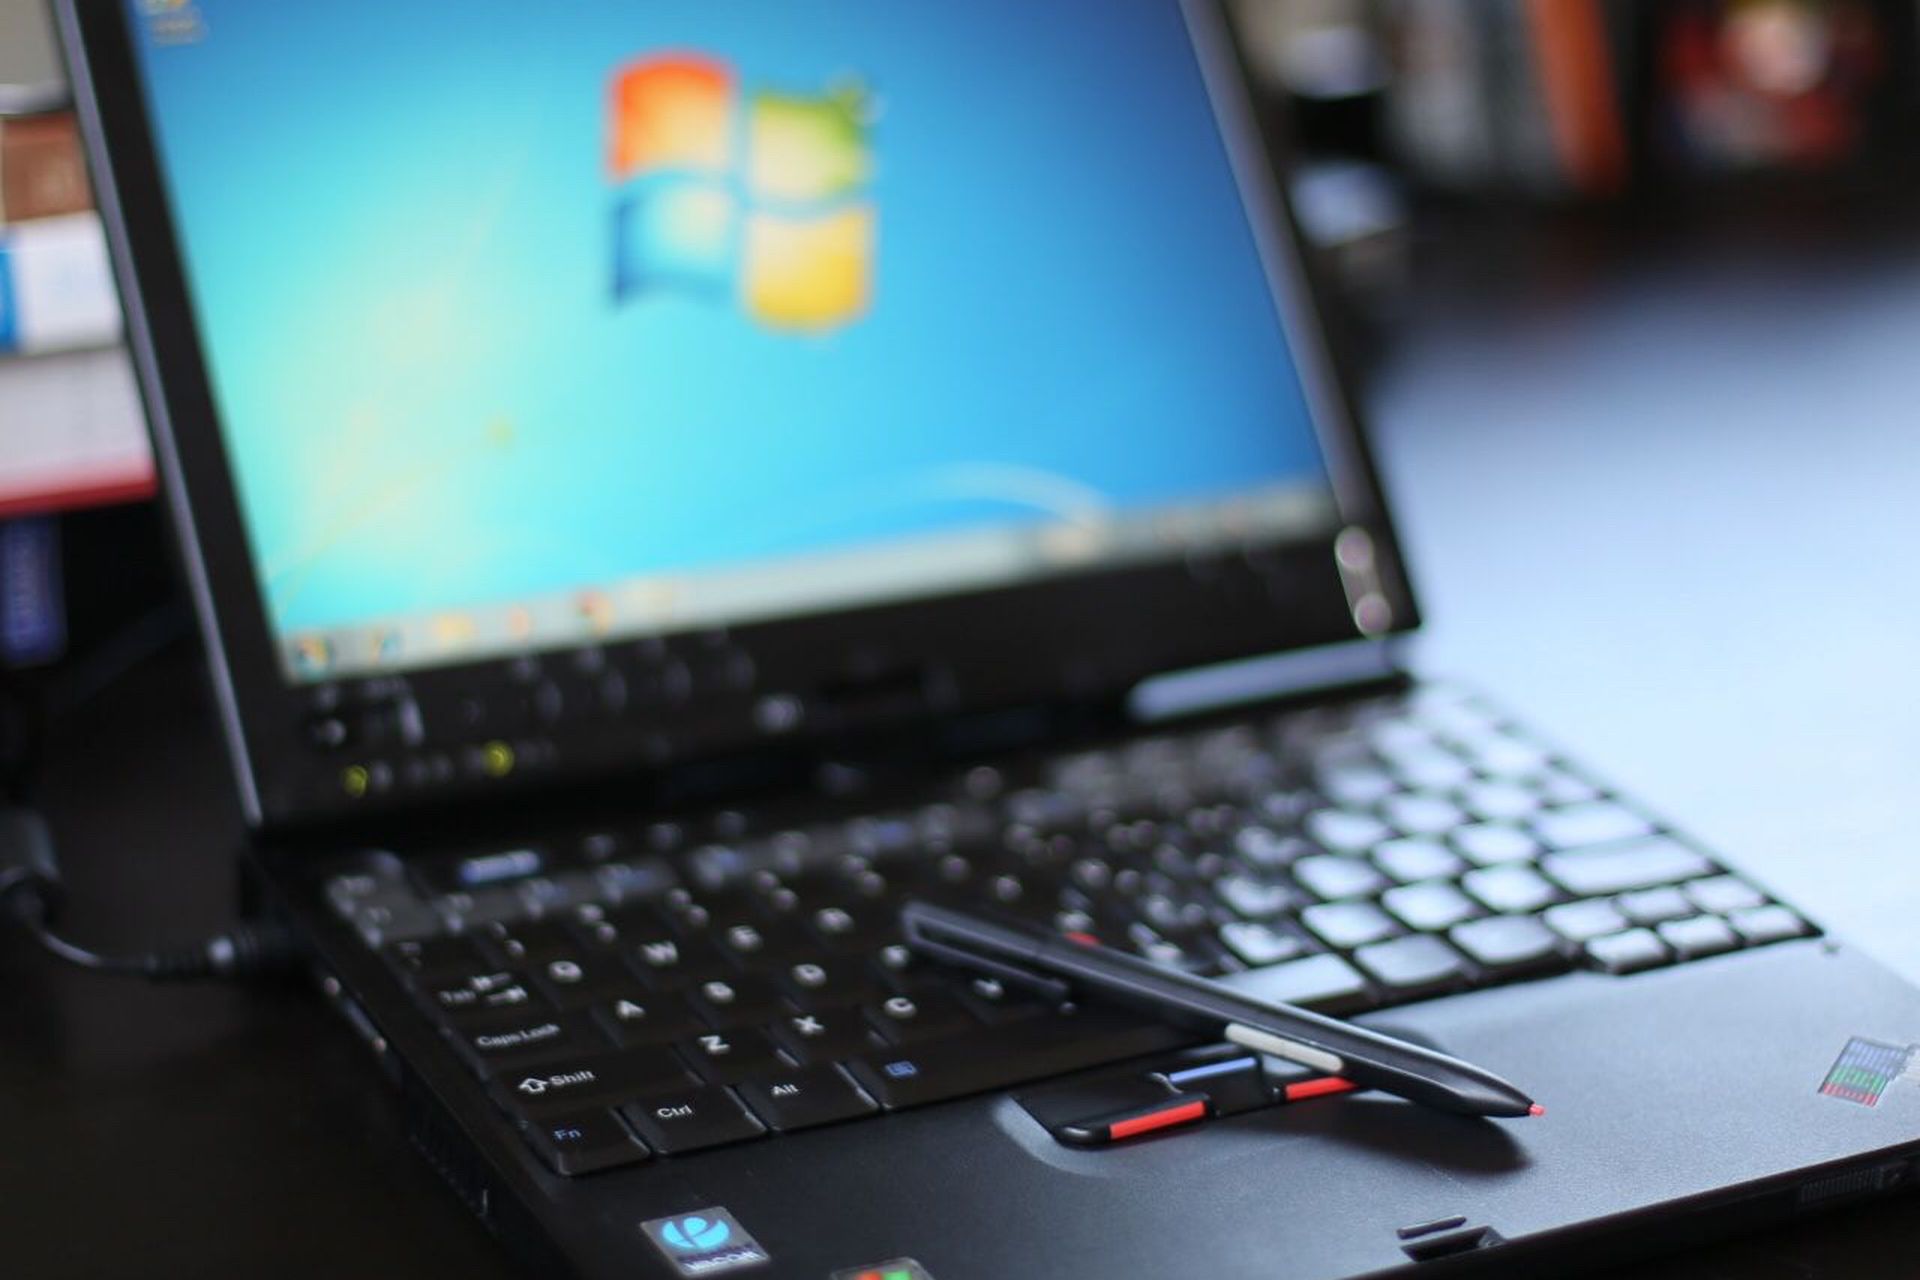 Free IBM Lenovo Thinkpad X41 Laptop/Tablet